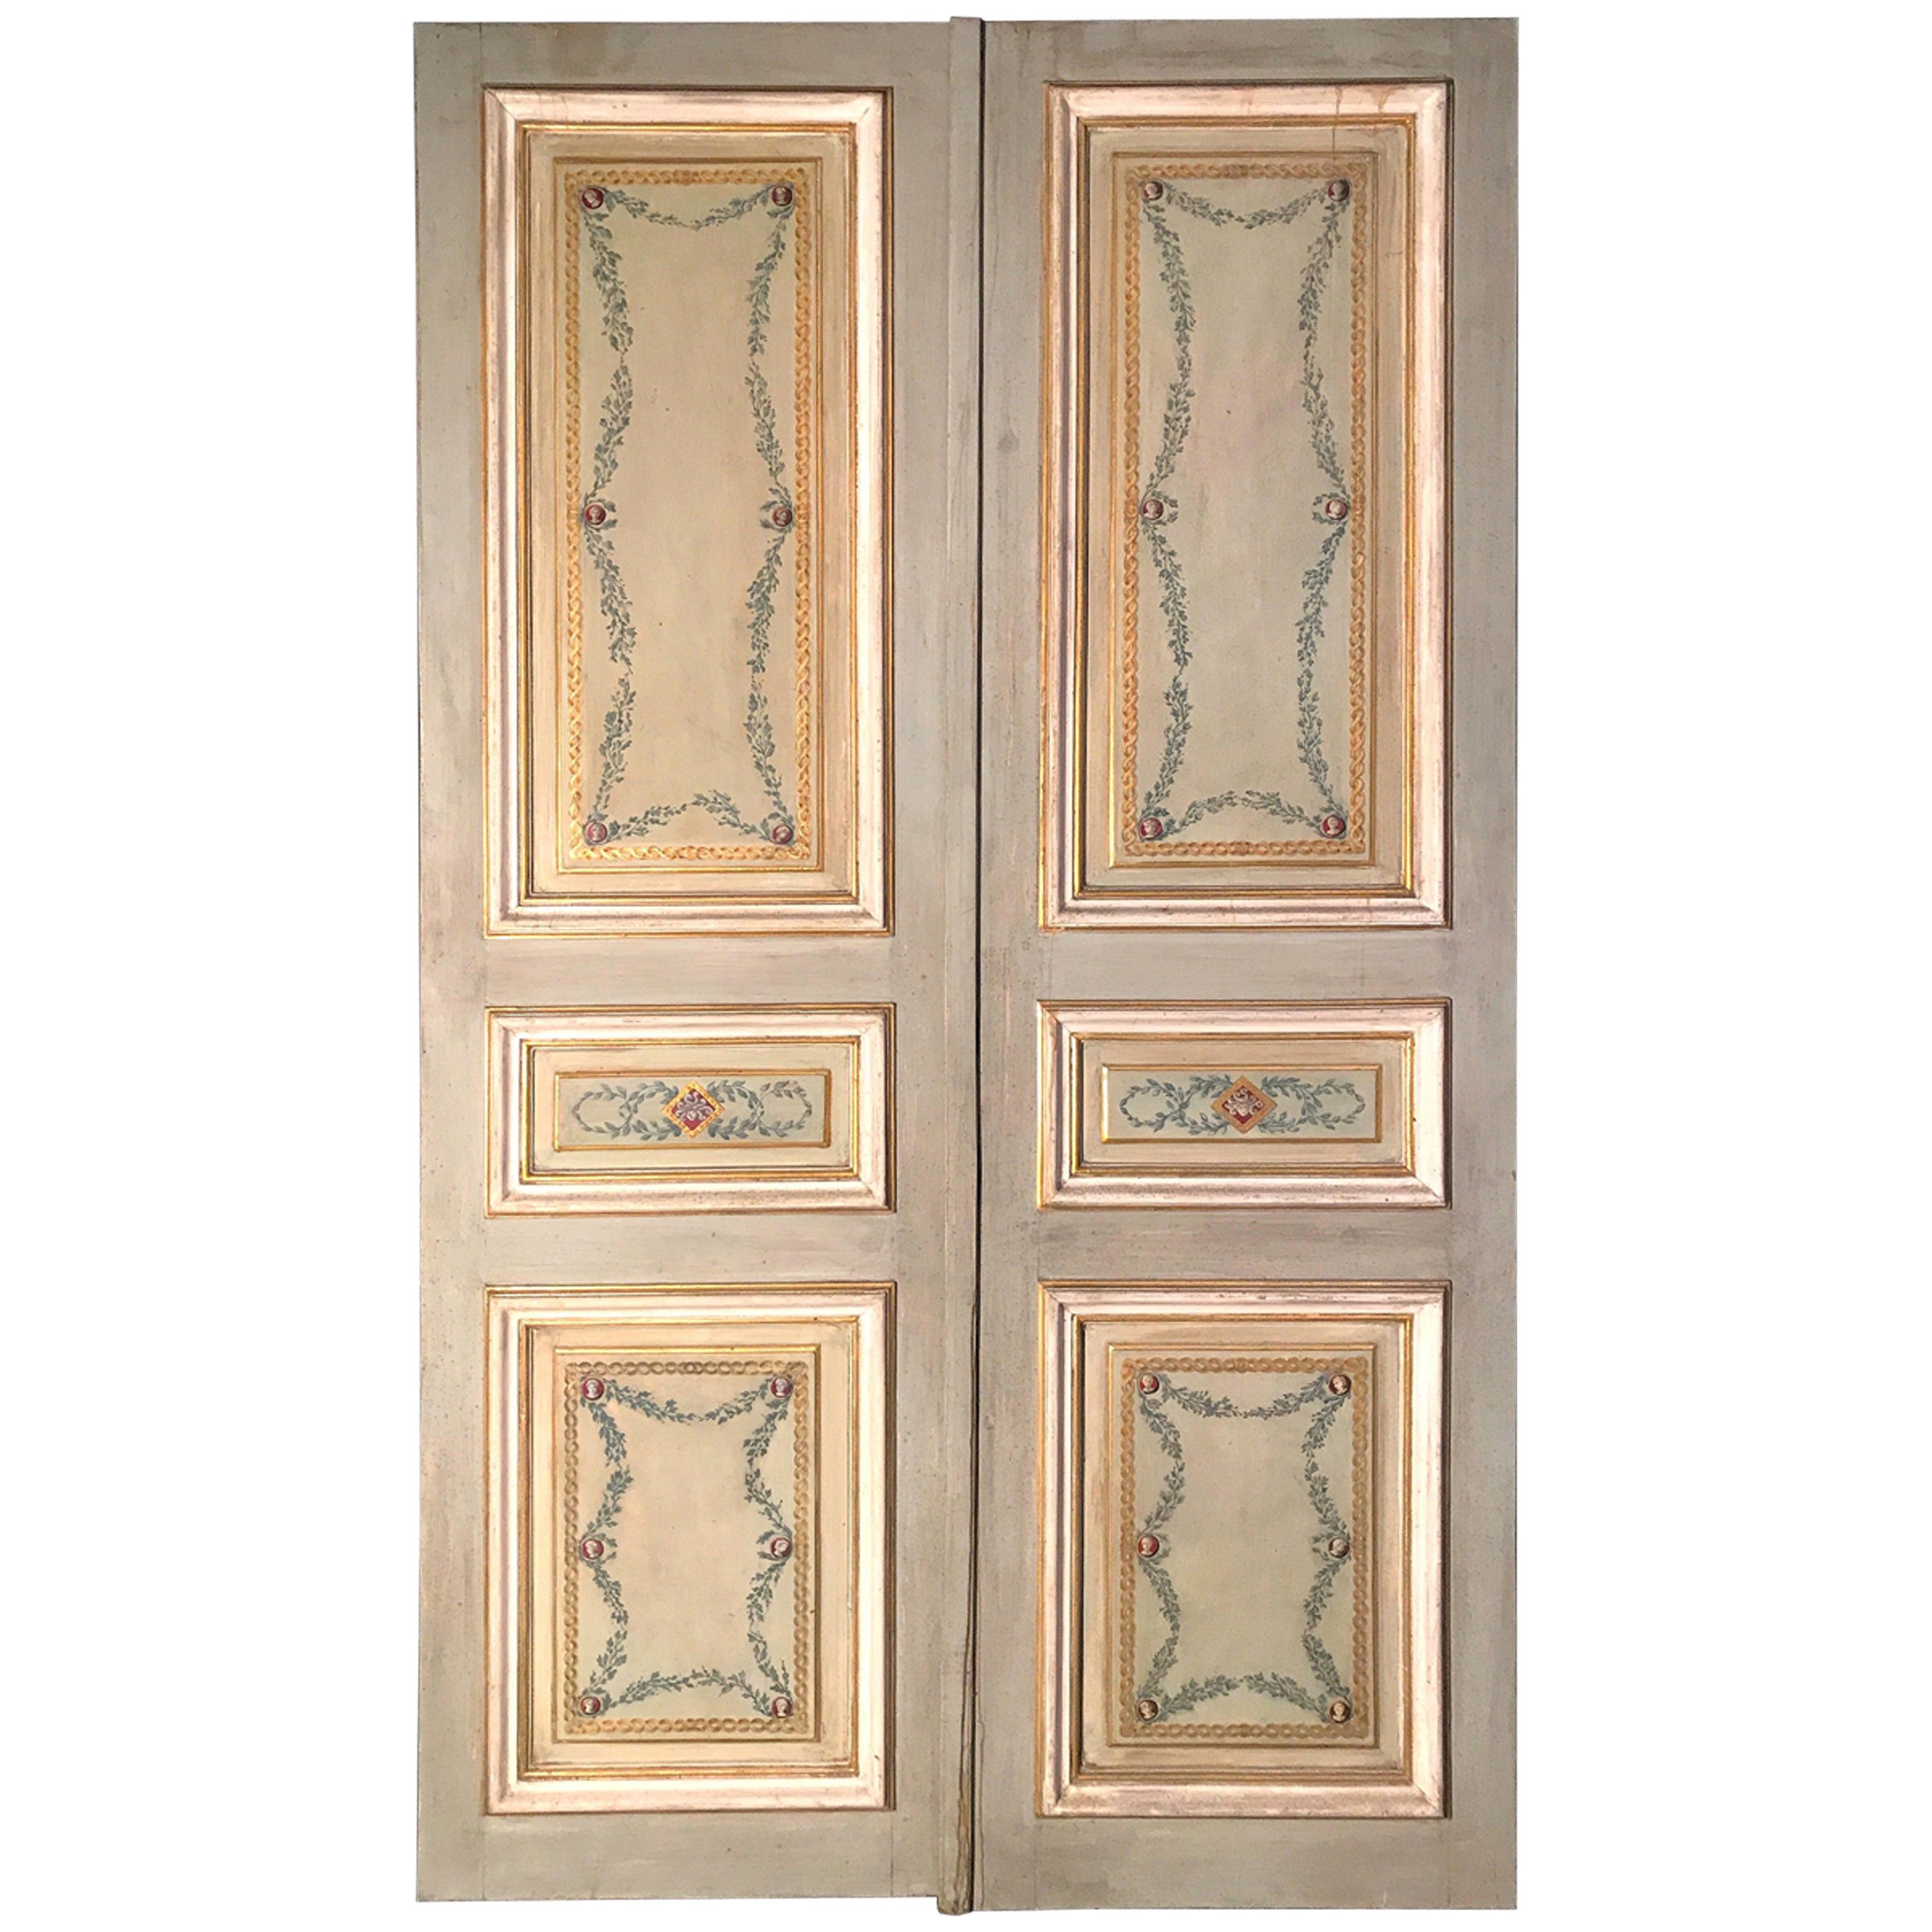  Pair of 19th Century Italian Painted Doors or Panelling